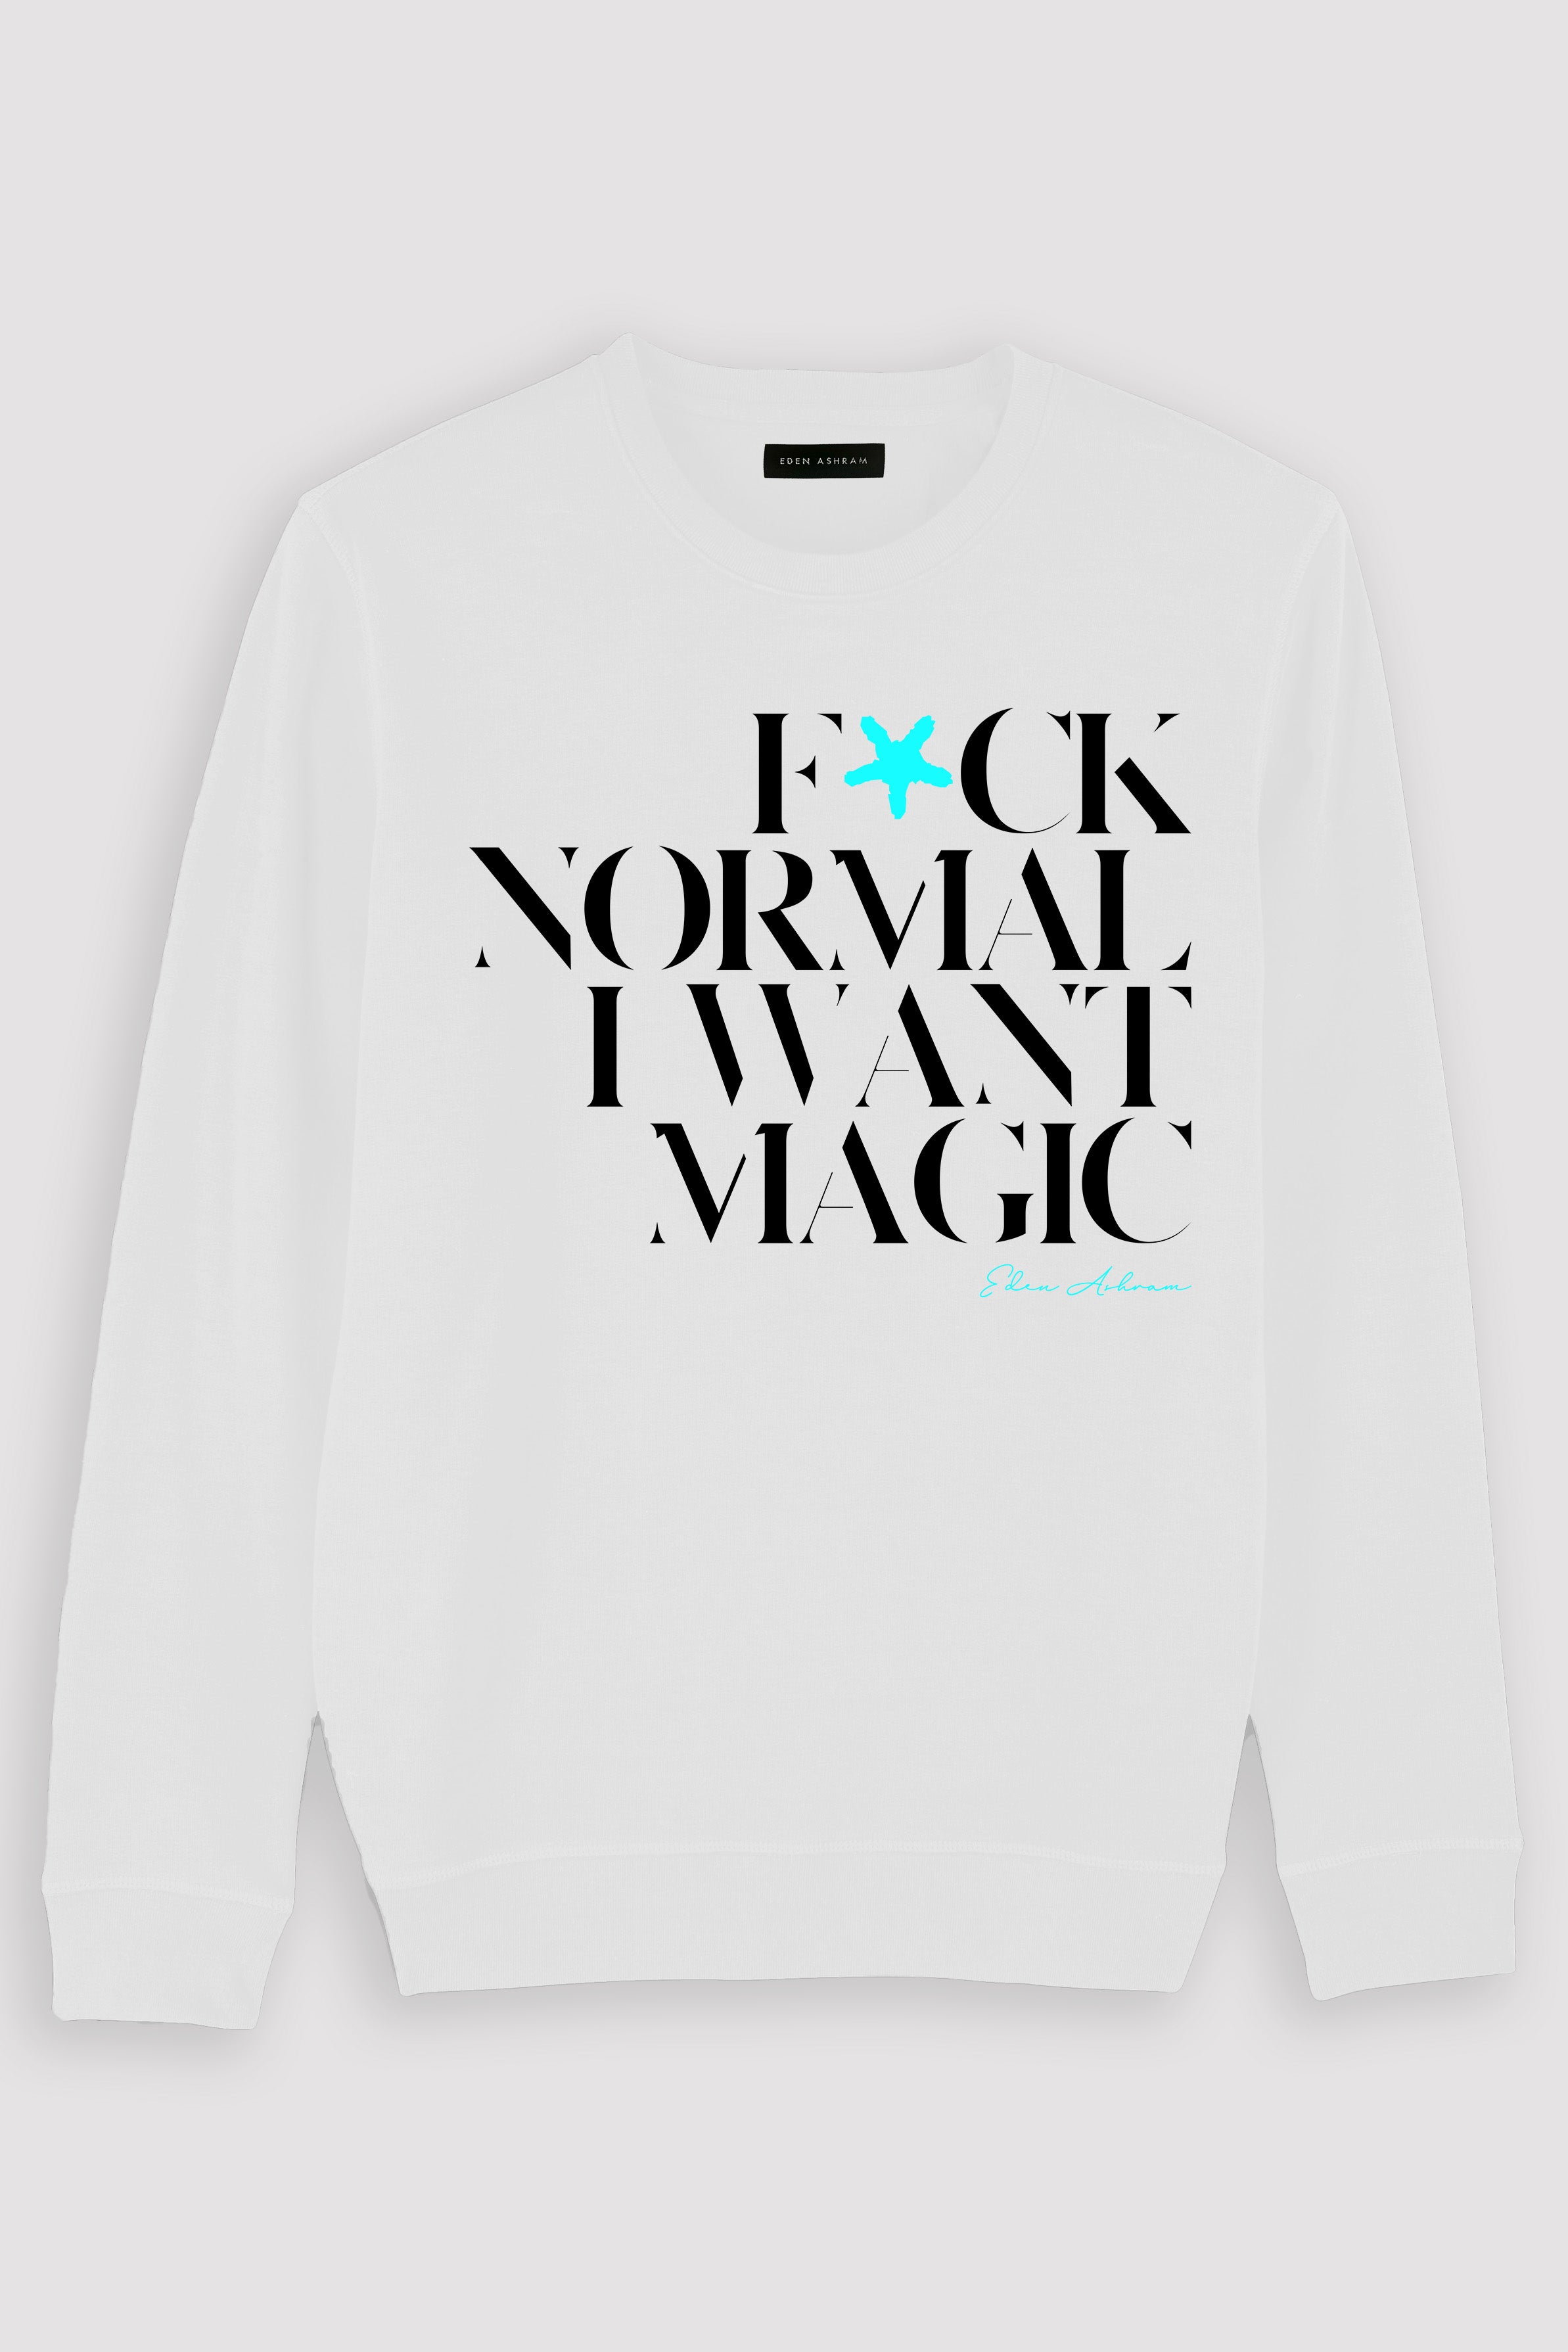 EDEN ASHRAM F*ck Normal I Want Magic Premium Crew Neck Sweatshirt White